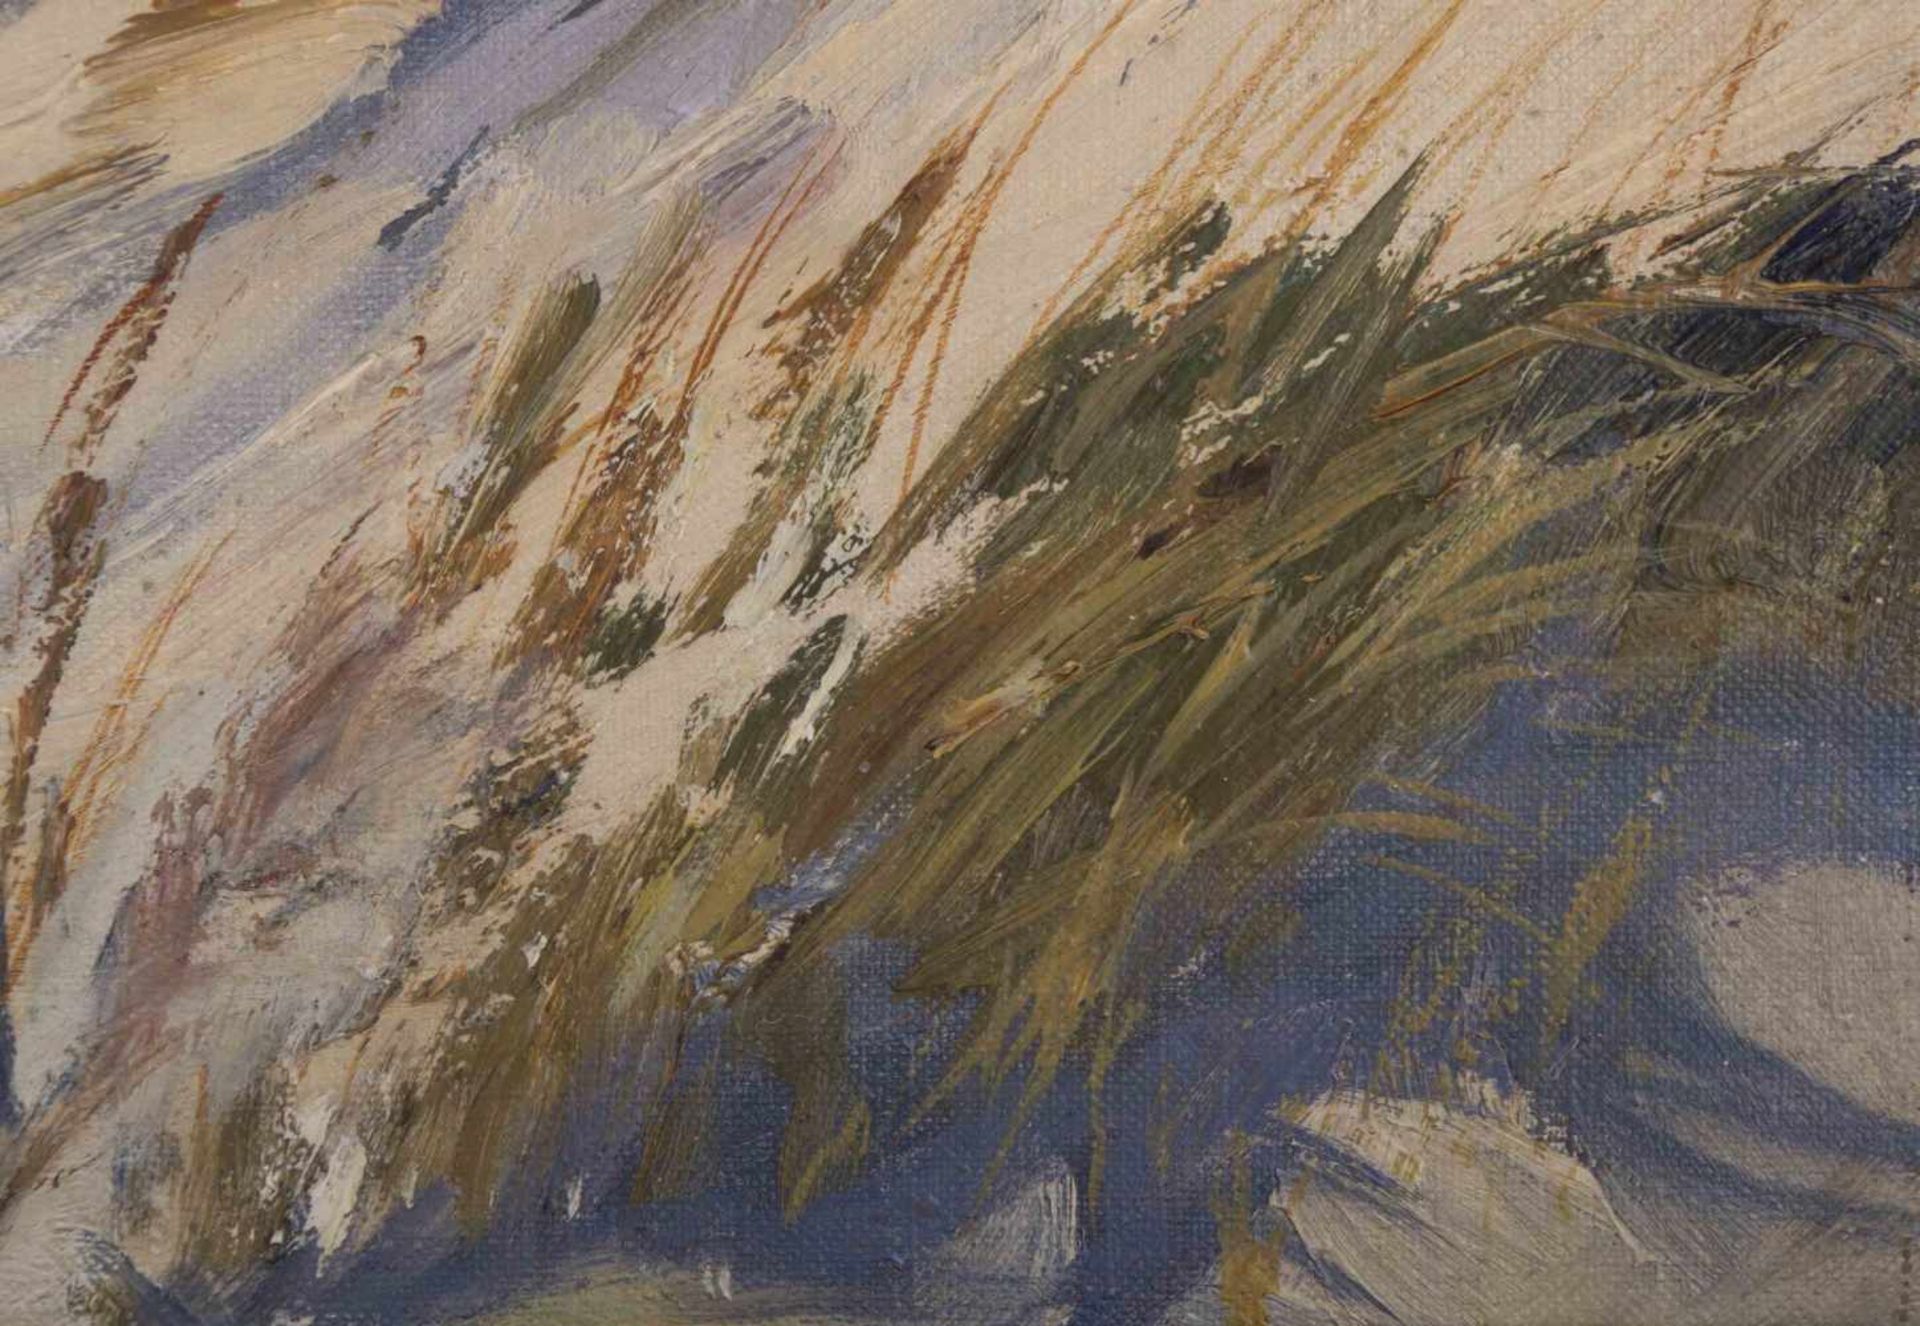 Henry GUNDLACH (1884-1965) "Dünen auf Sylt" Gemälde Öl auf Leinwand, 50,5 cm x 60 cm, unten links - Bild 3 aus 6